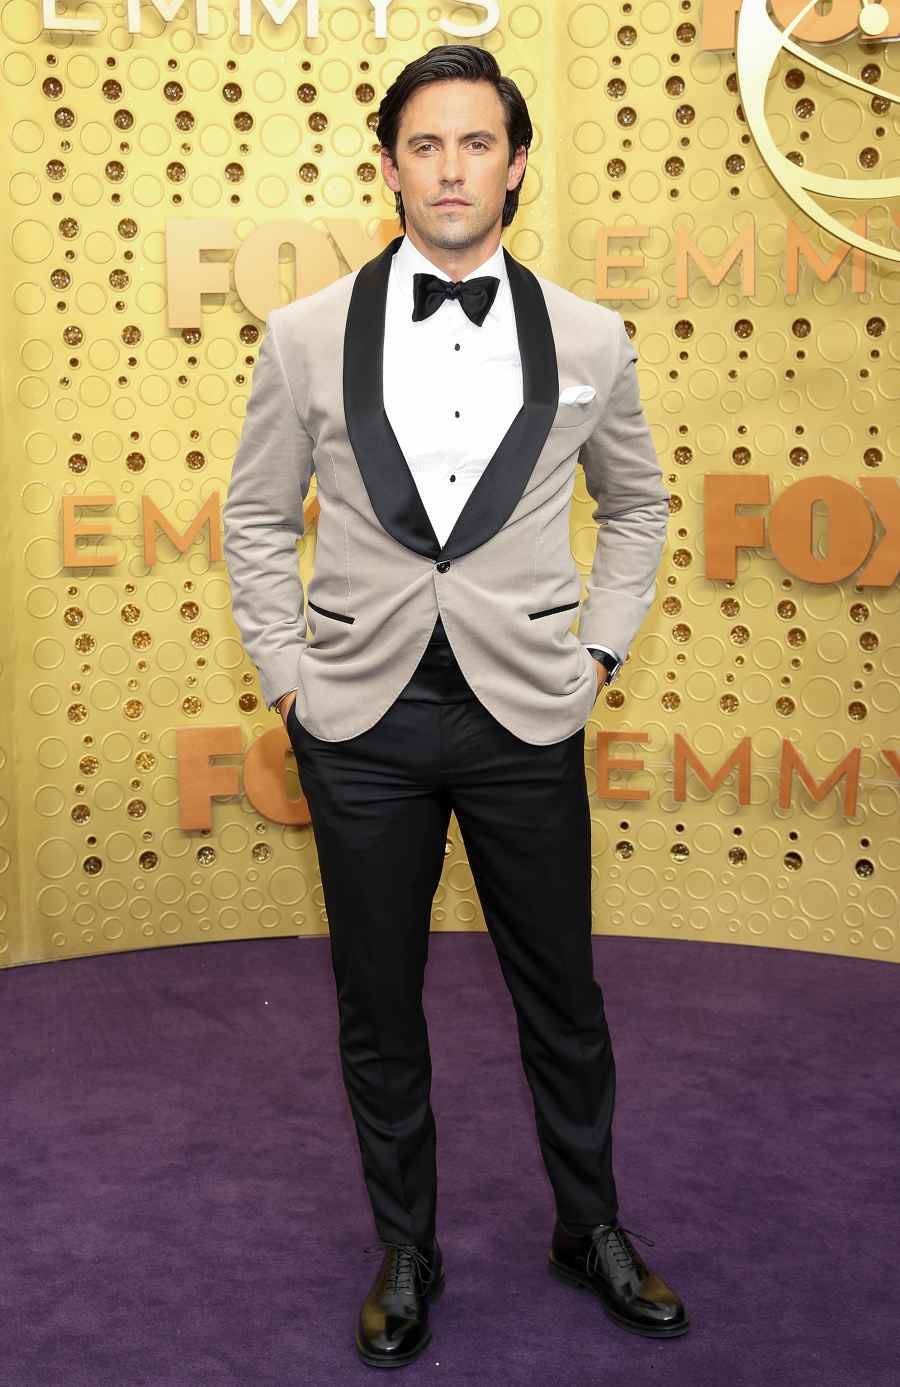 Emmys 2019 Hottest Hunks - Milo Ventimiglia